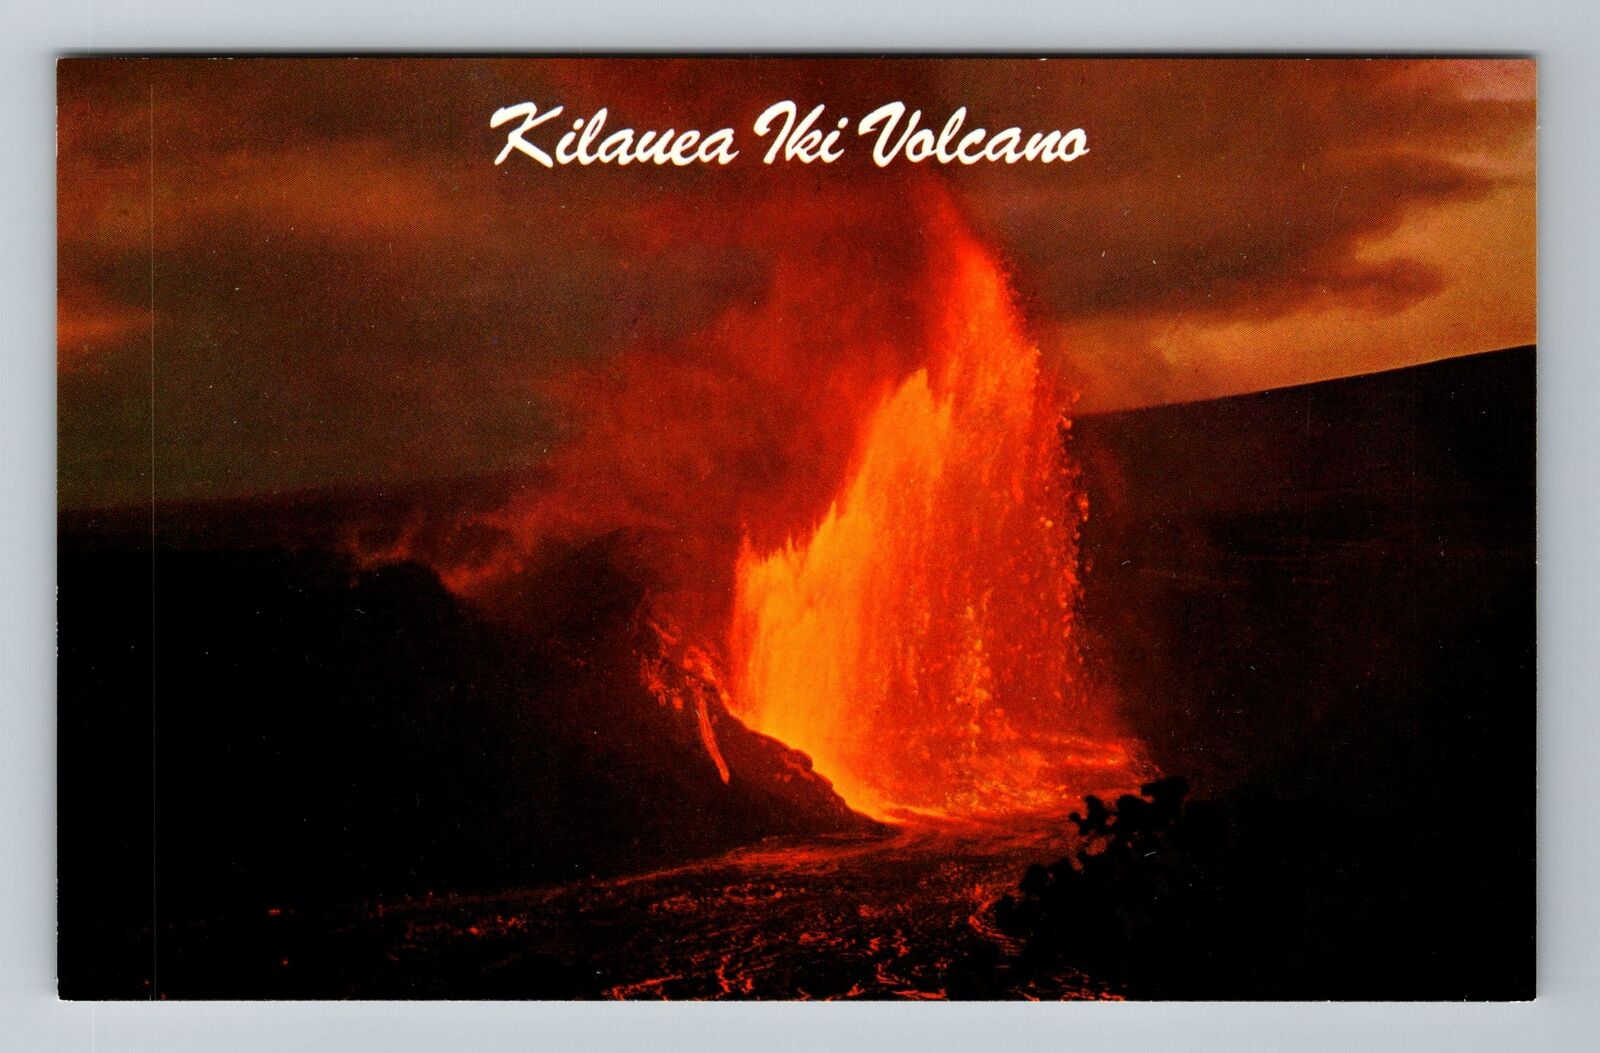 Hilo HI-Hawaii Erupting Kilauea IKI Volcano Antique Vintage Souvenir Postcard